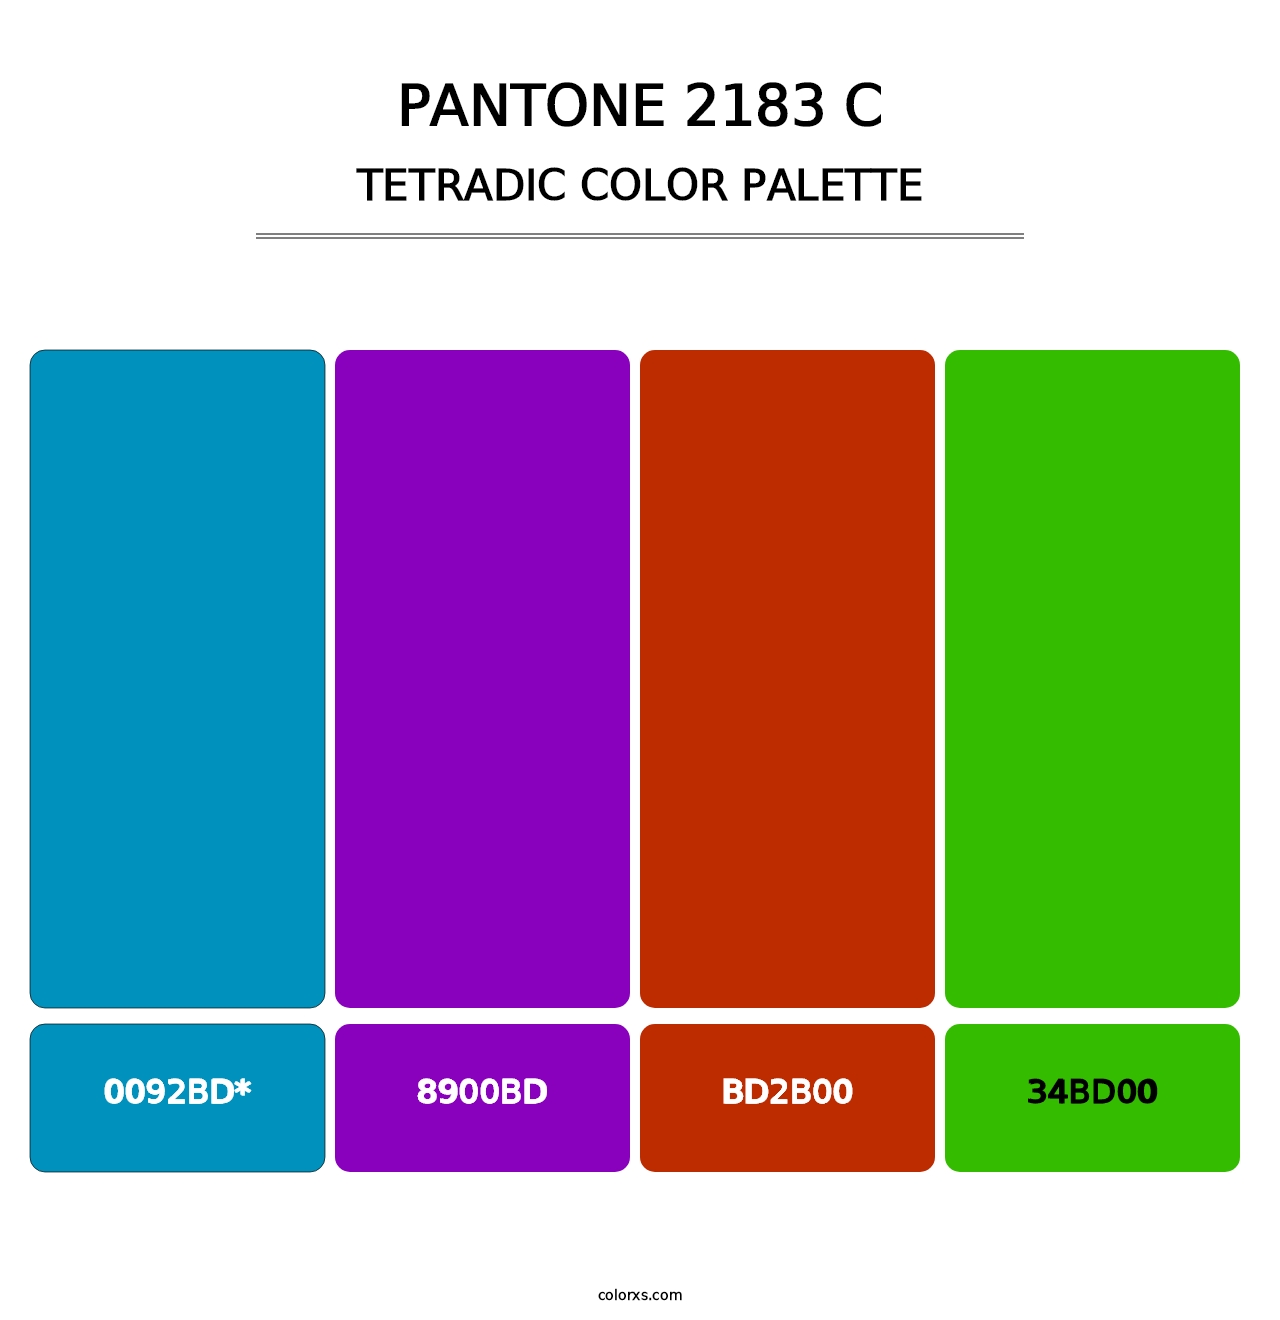 PANTONE 2183 C - Tetradic Color Palette